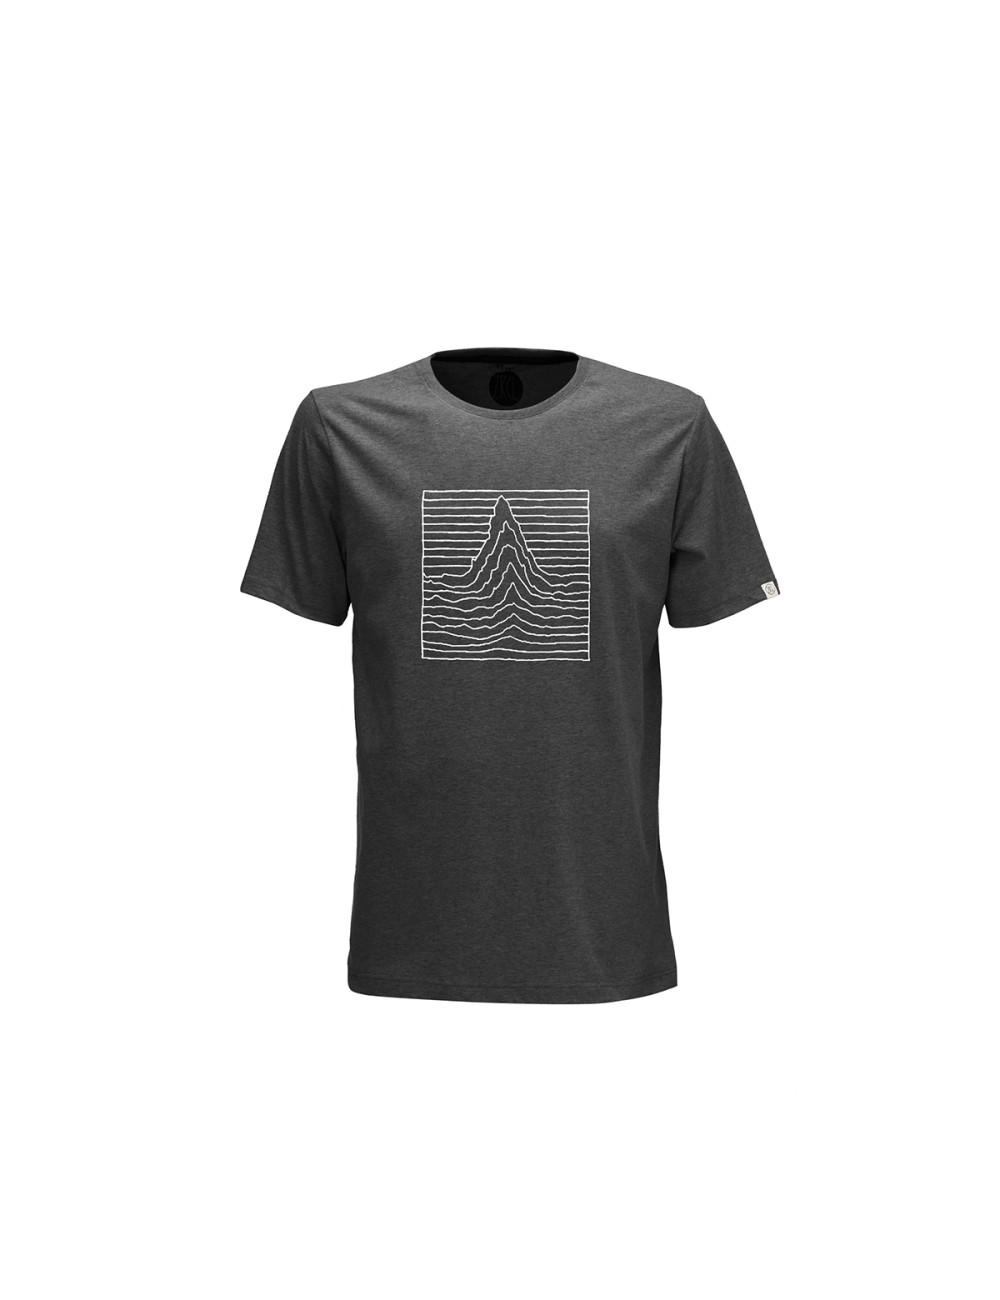 ZRCL Elevation T-Shirt - Onyx